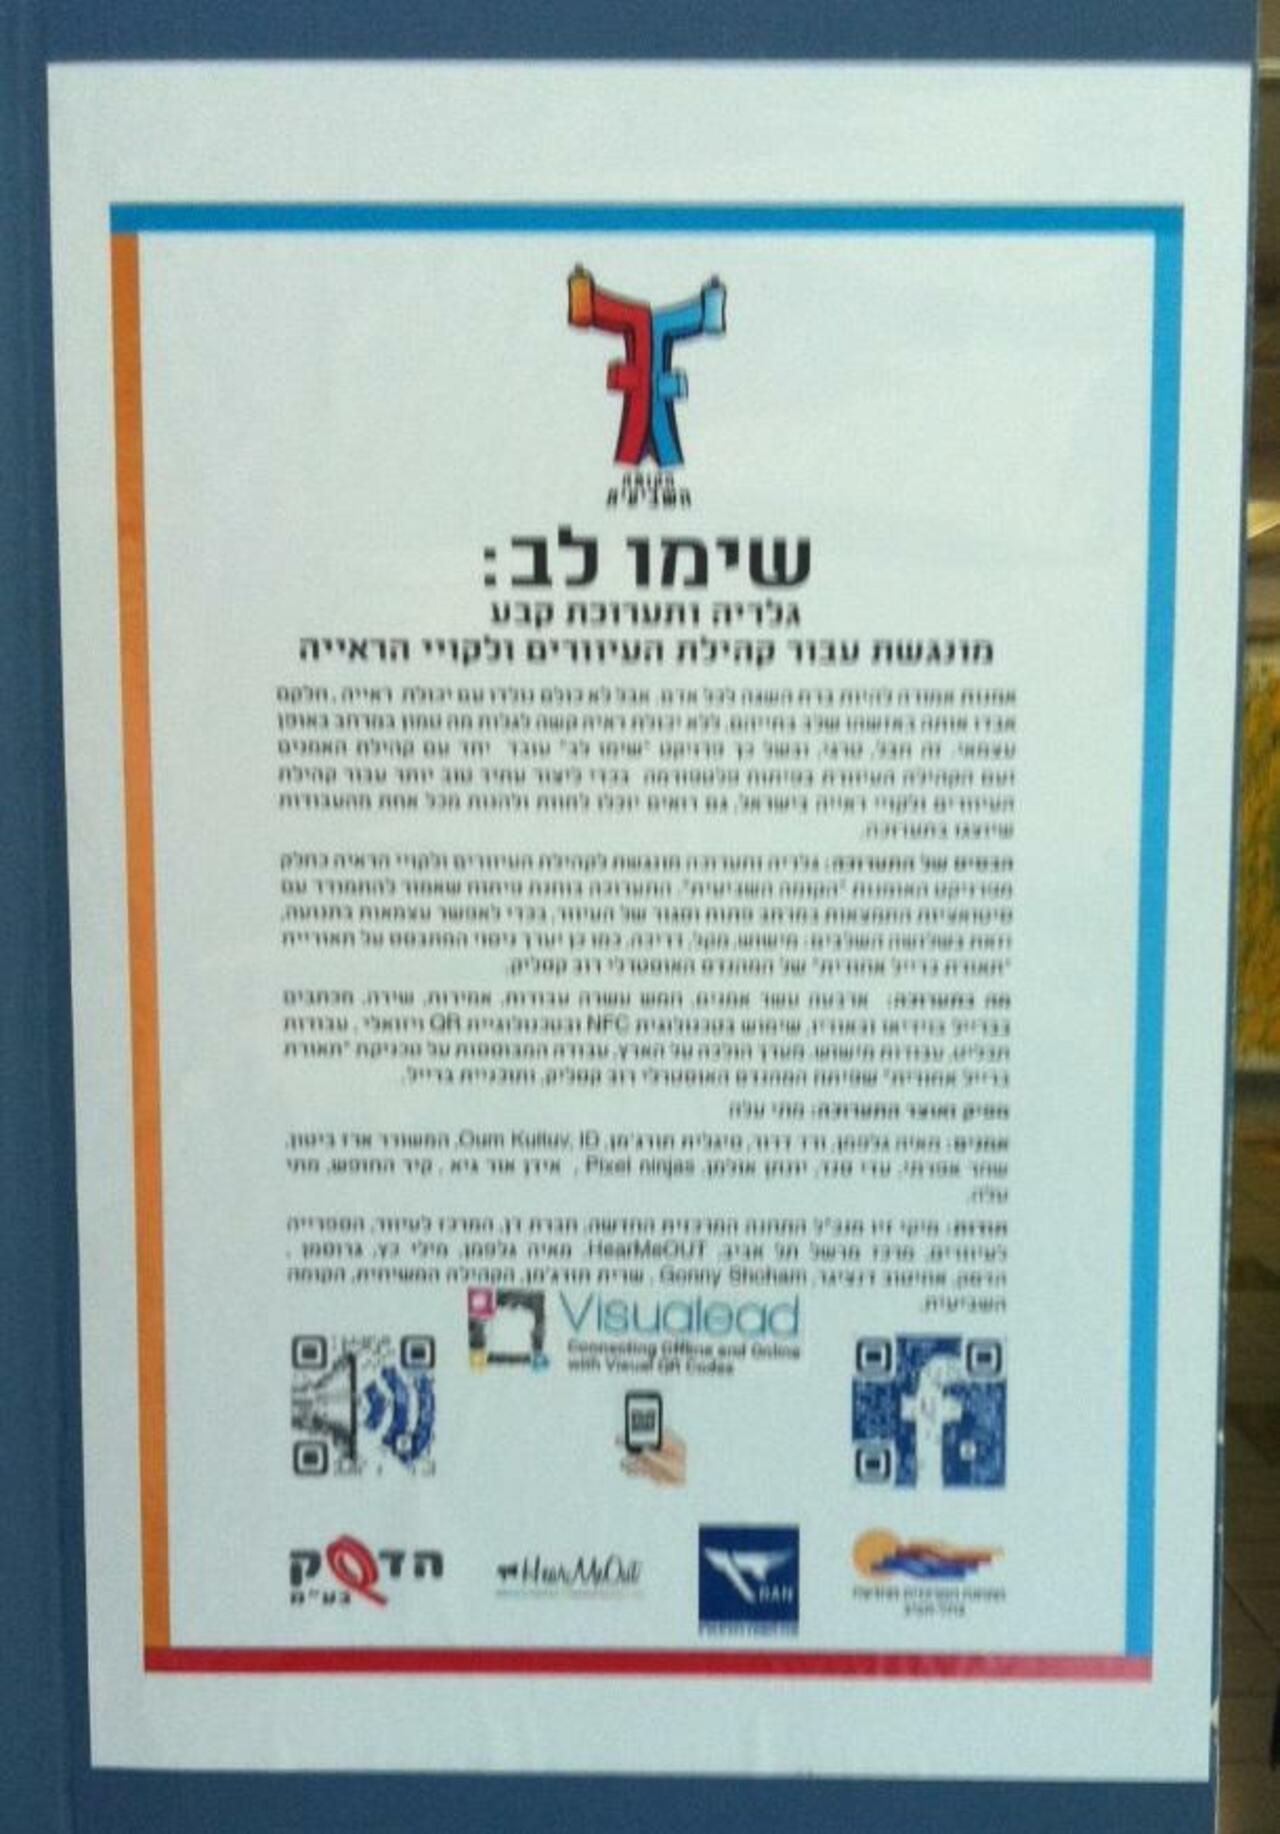 RT http://twitter.com/visualead/status/653737421994115073 The 7th Floor #Graffiti and #StreetArt #Exhibition in #TelAviv!
AMAZING WORKS!

… http://t.co/d2AOVL3jY6